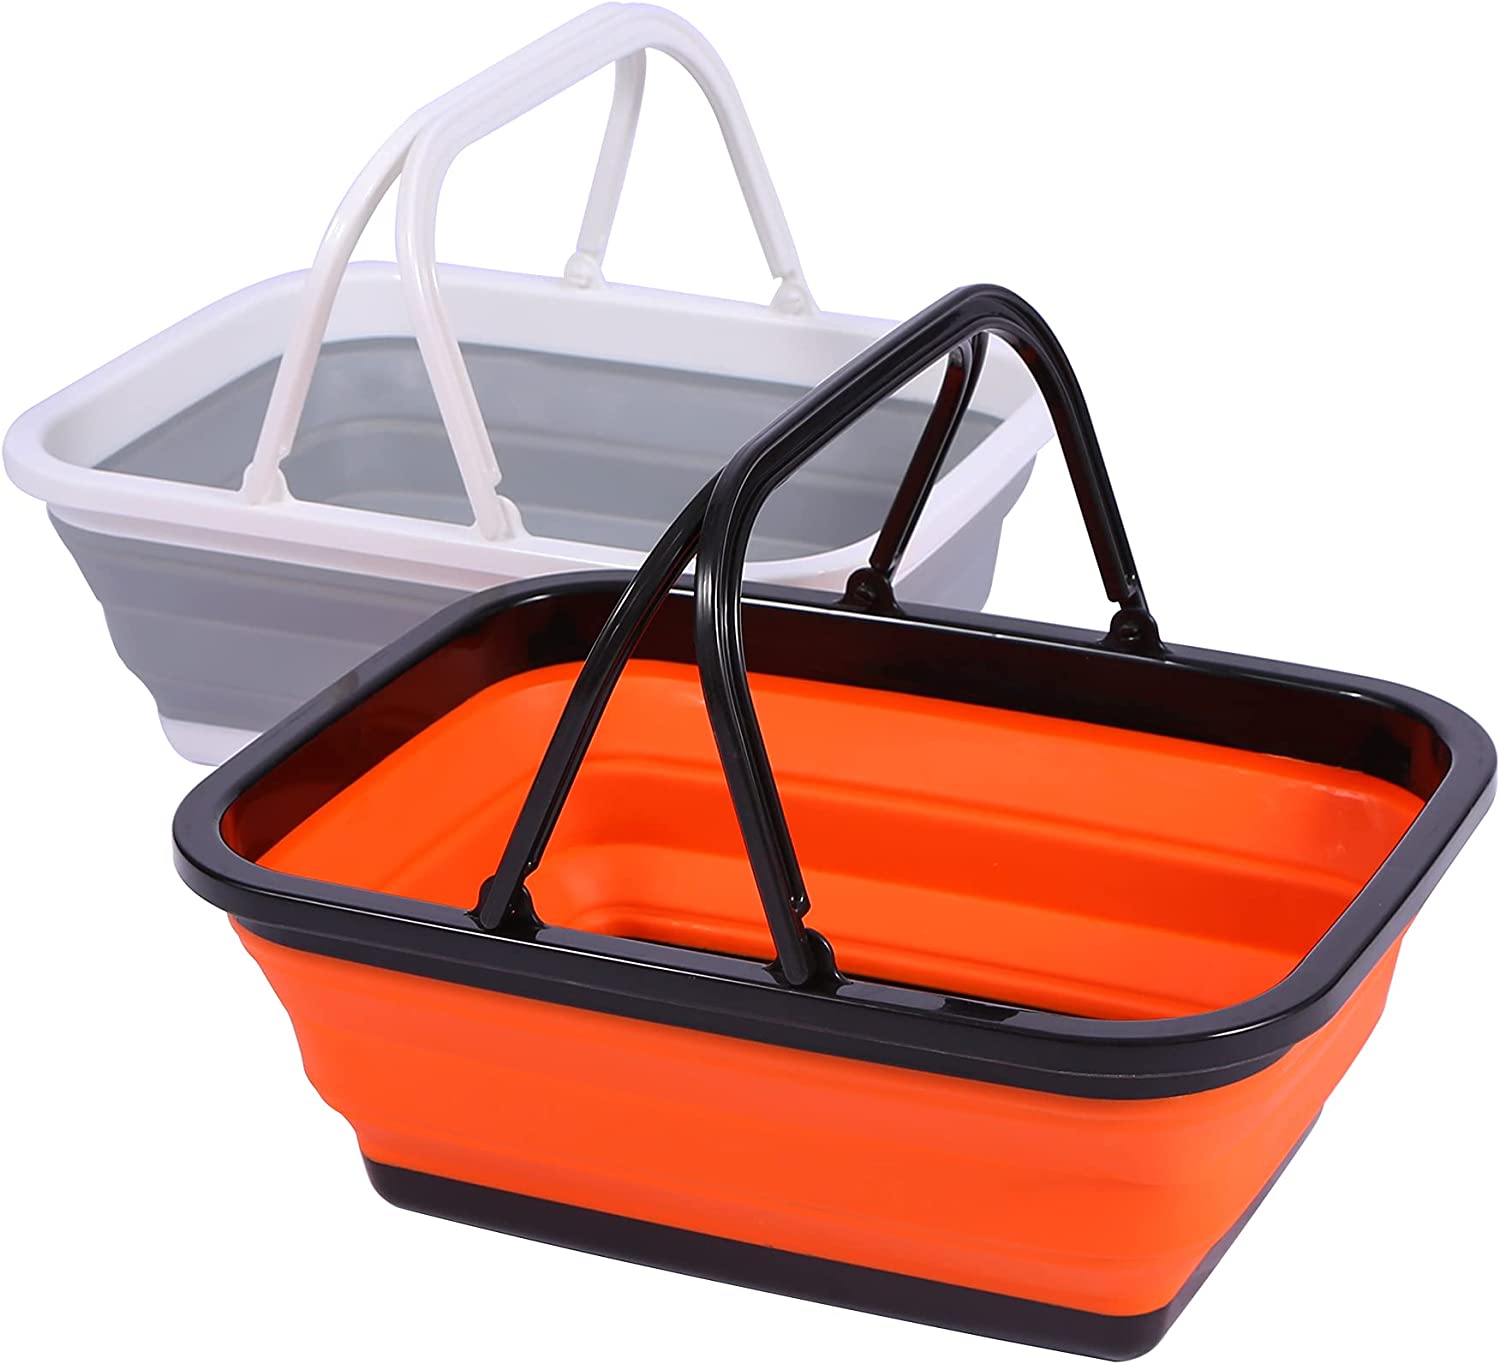 Pack of 2 folding sinks, 9L capacity, color: orange y grey